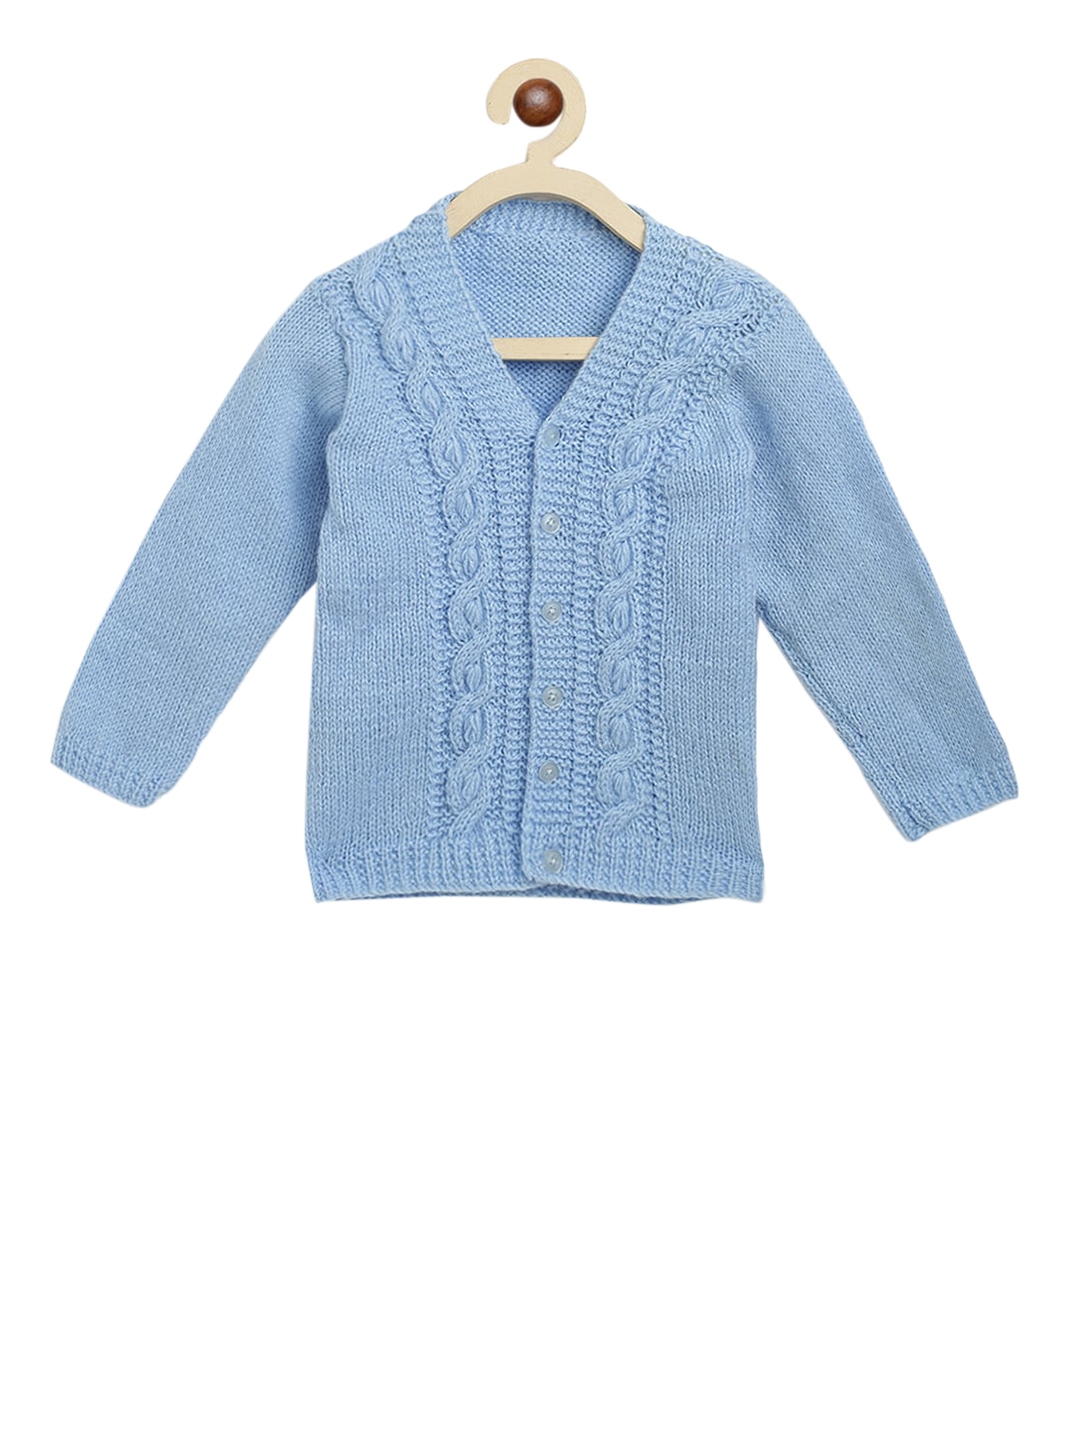 Buy CHUTPUT Unisex Kids Blue Self Design Cardigan Sweater - Sweaters ...